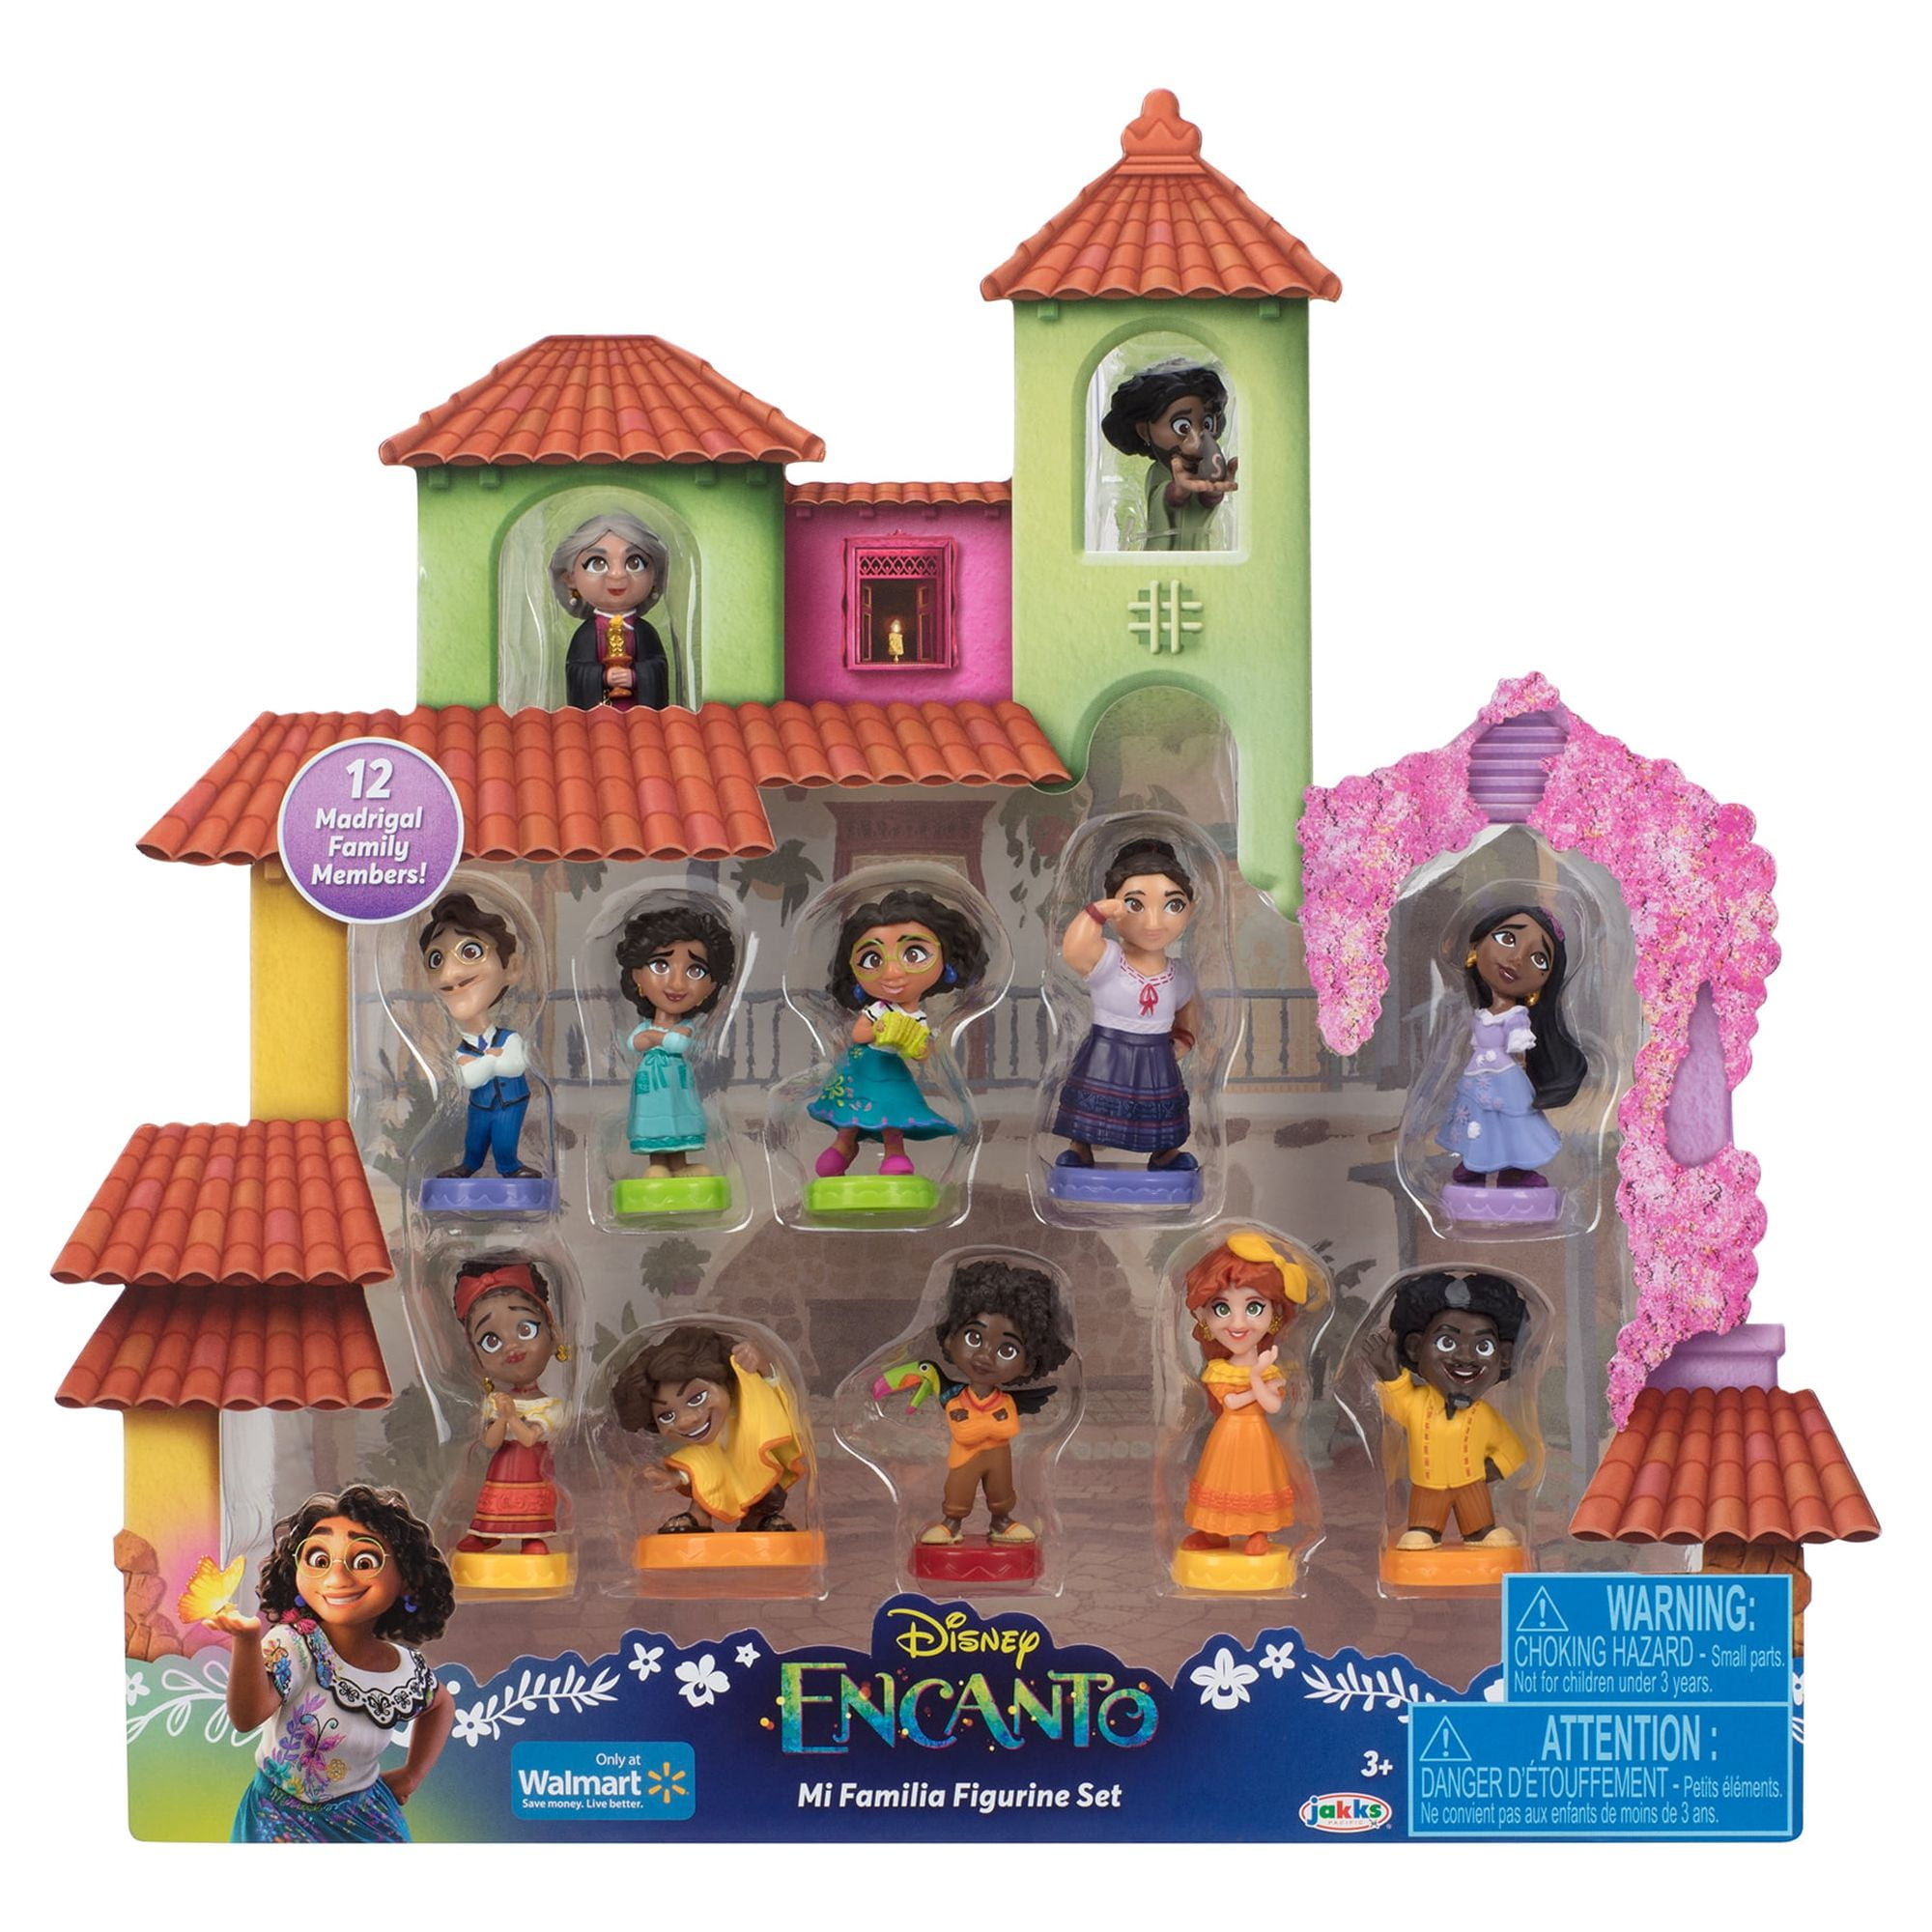 Encanto Disney Mi Familia Figurine Doll Playset, 12 Dominican